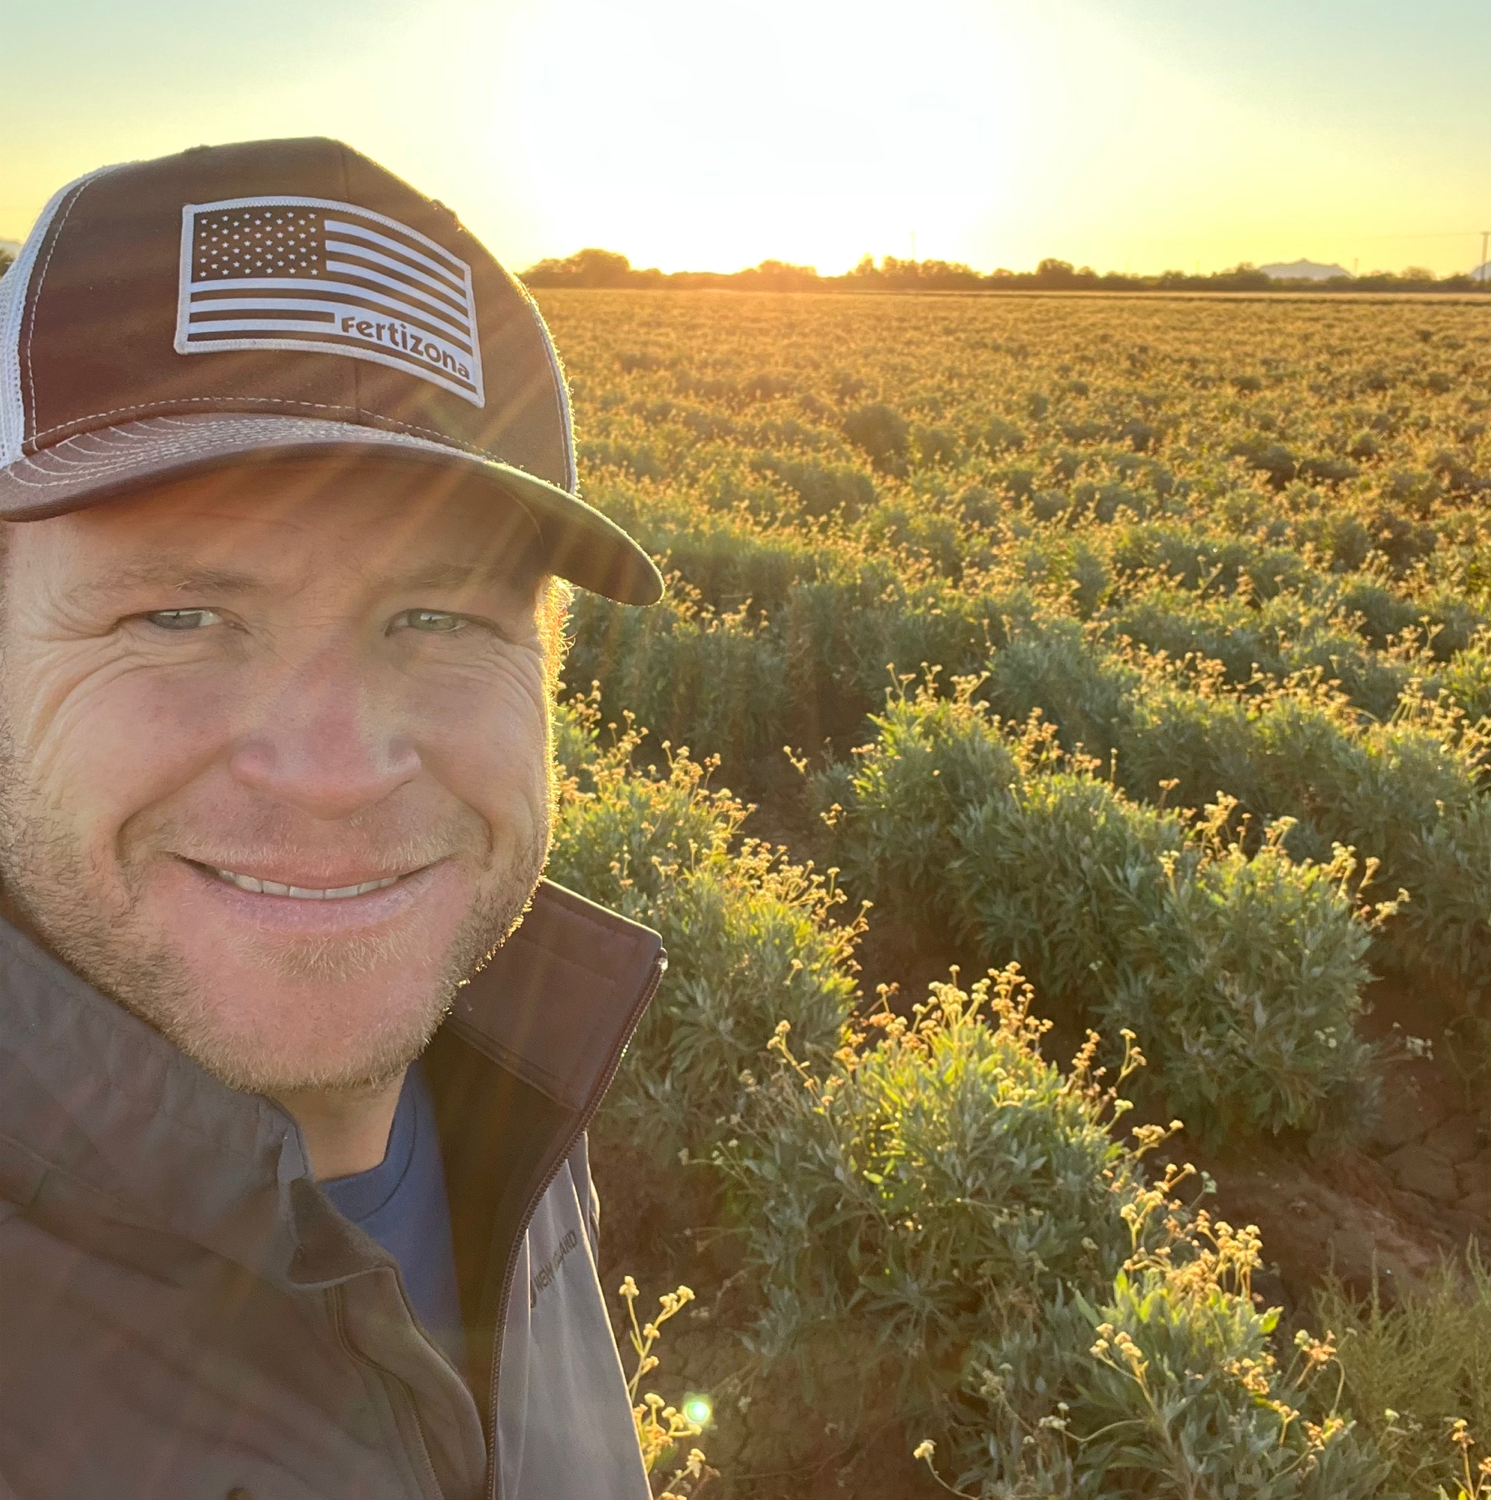 a farmer in a baseball cap takes a selfie in front of a farm of guayule